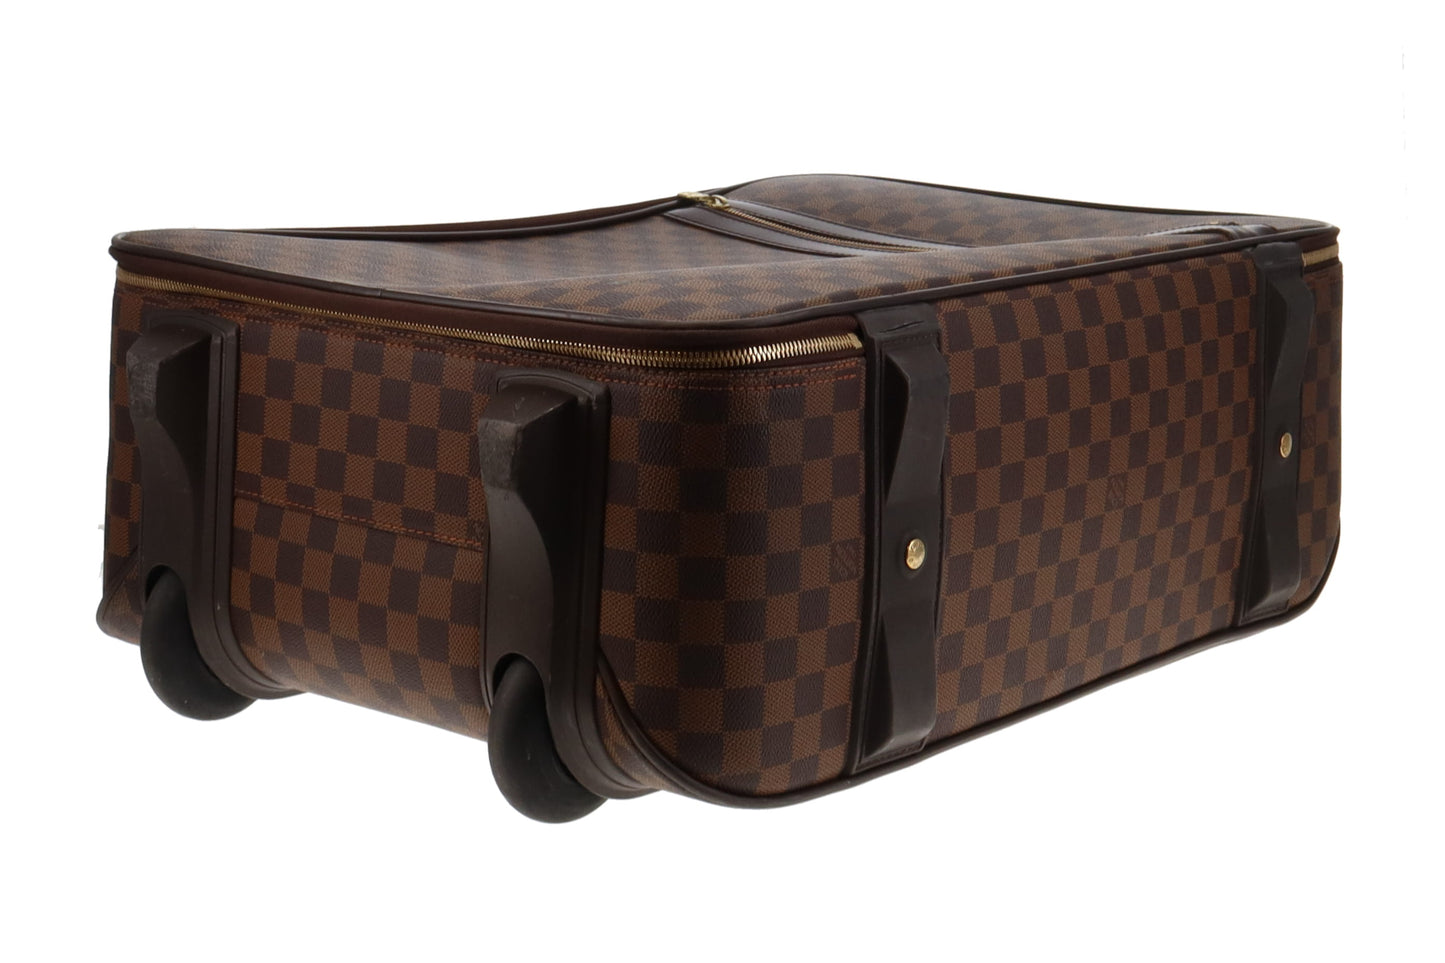 Louis Vuitton Damier Ebene Pegase 55 Rolling Luggage 2 Wheel